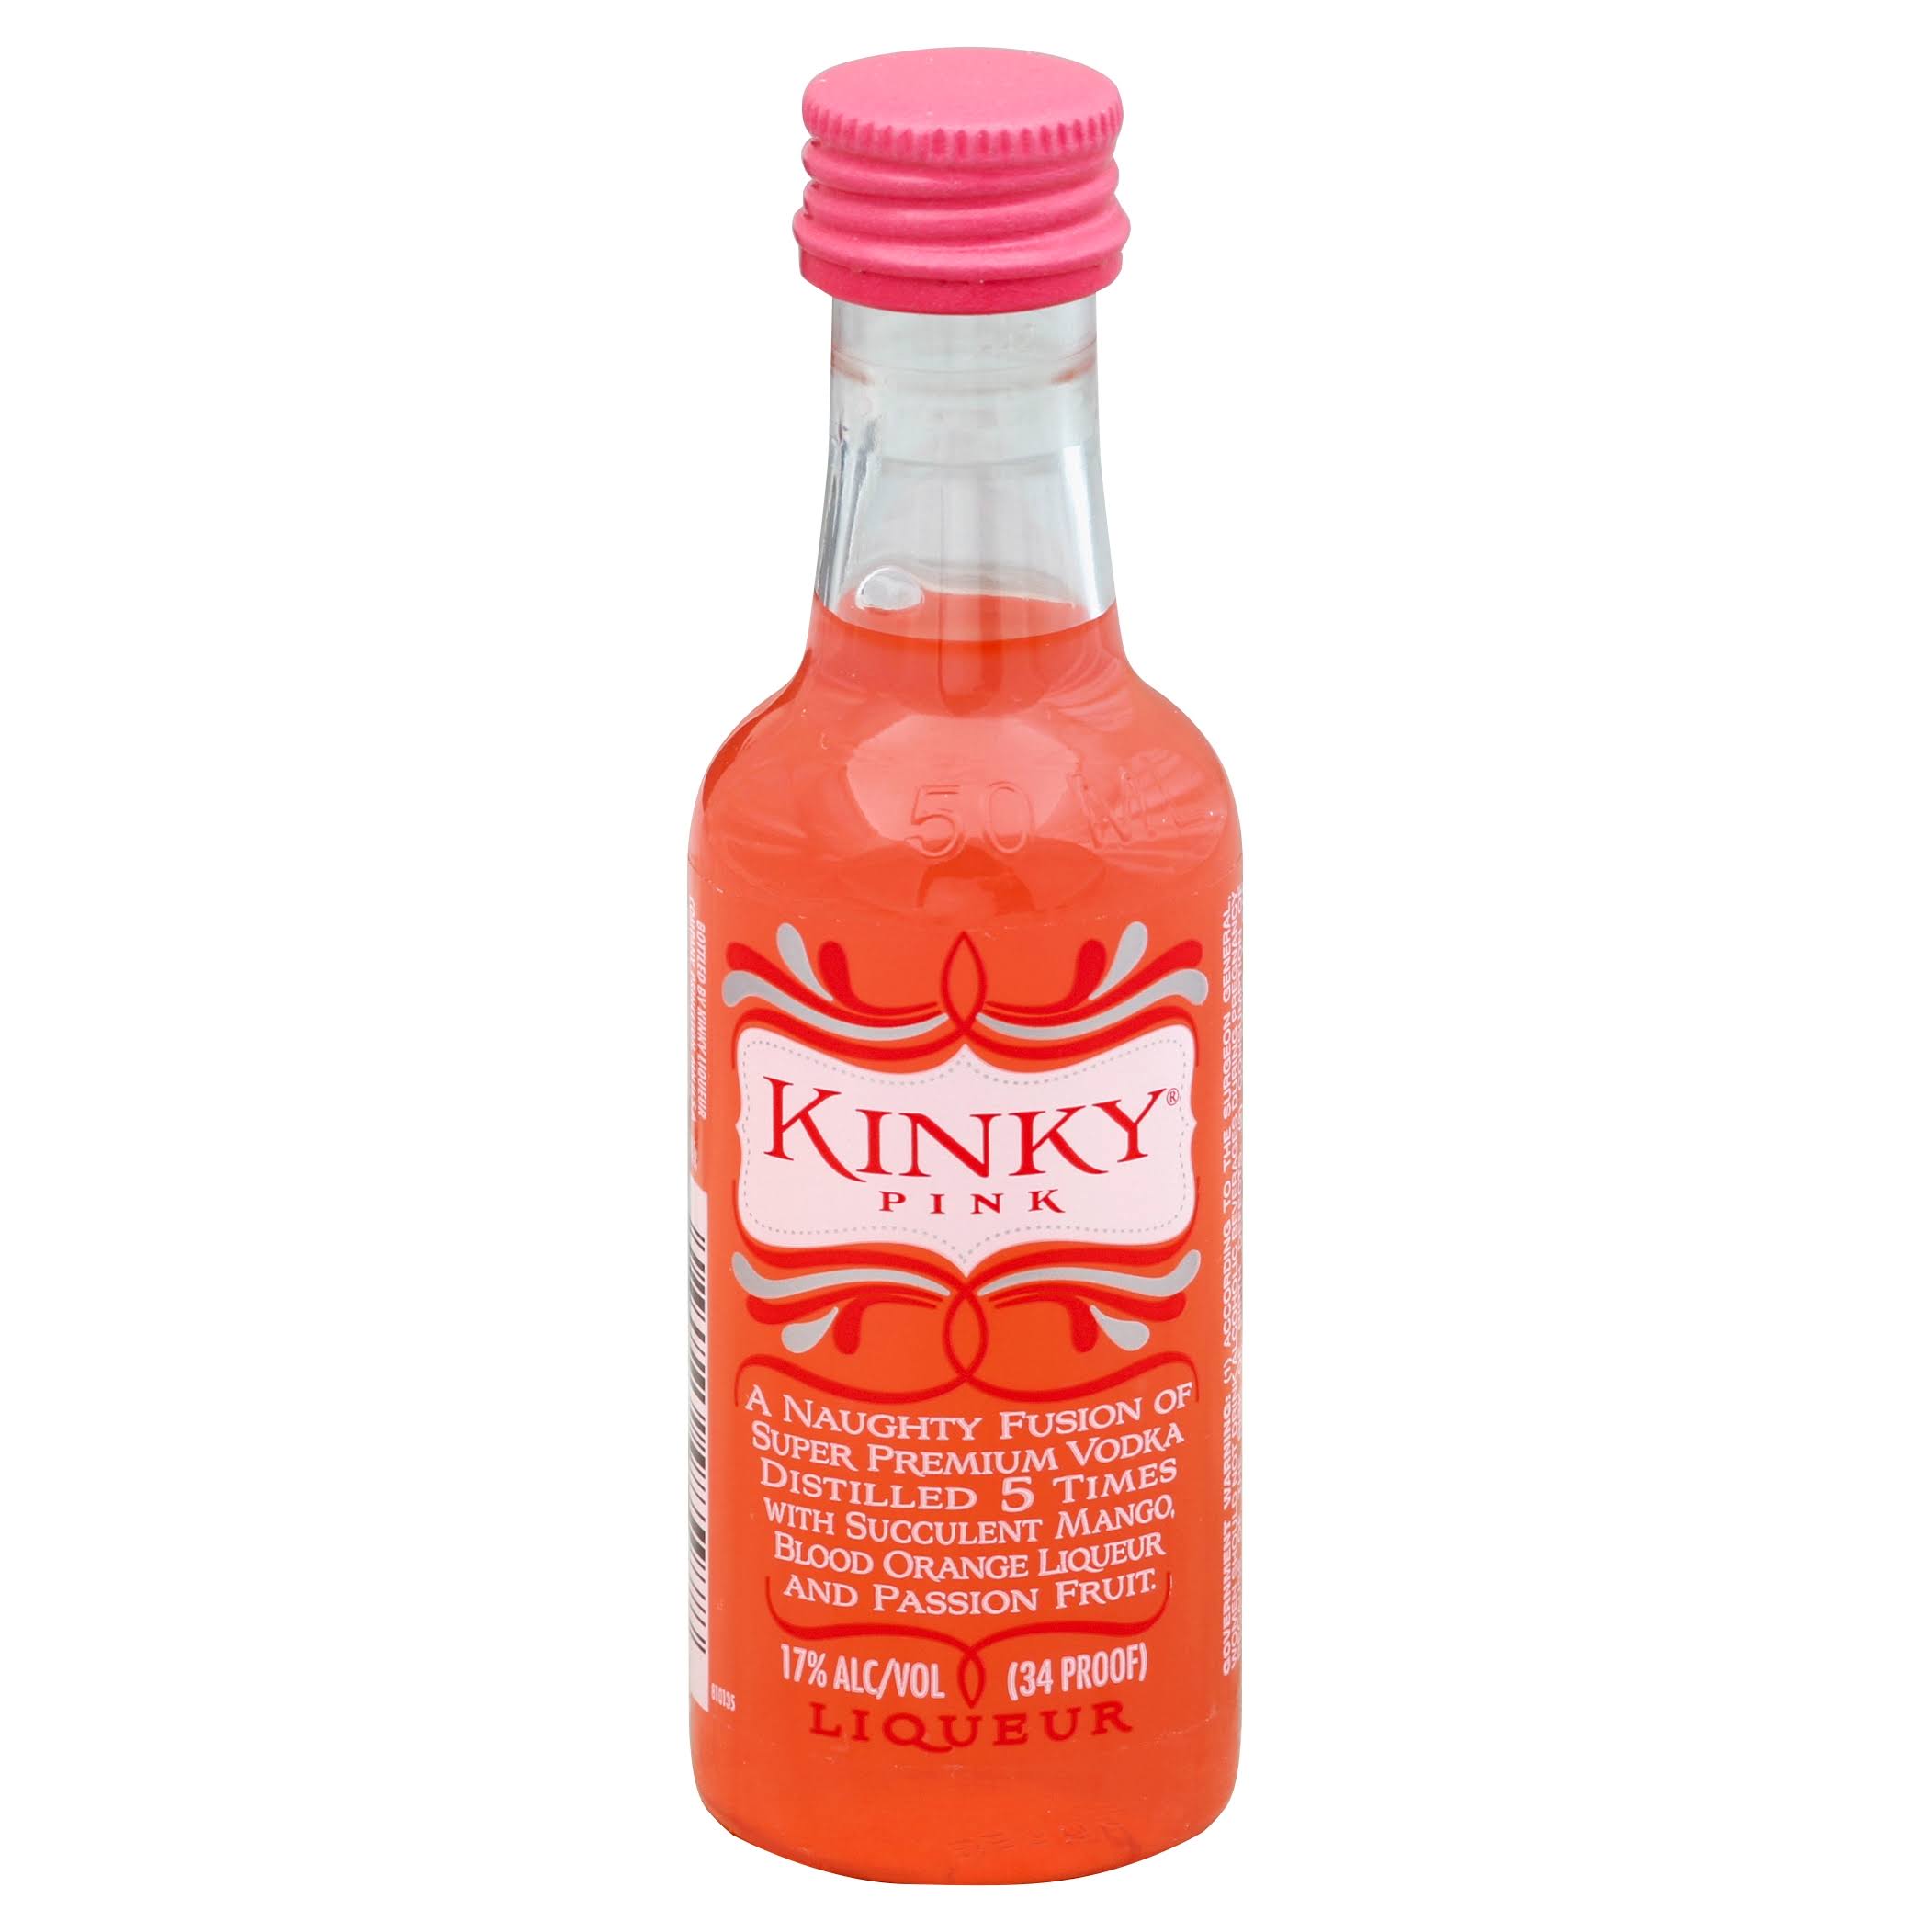 Kinky Liqueur, Green - 750 ml